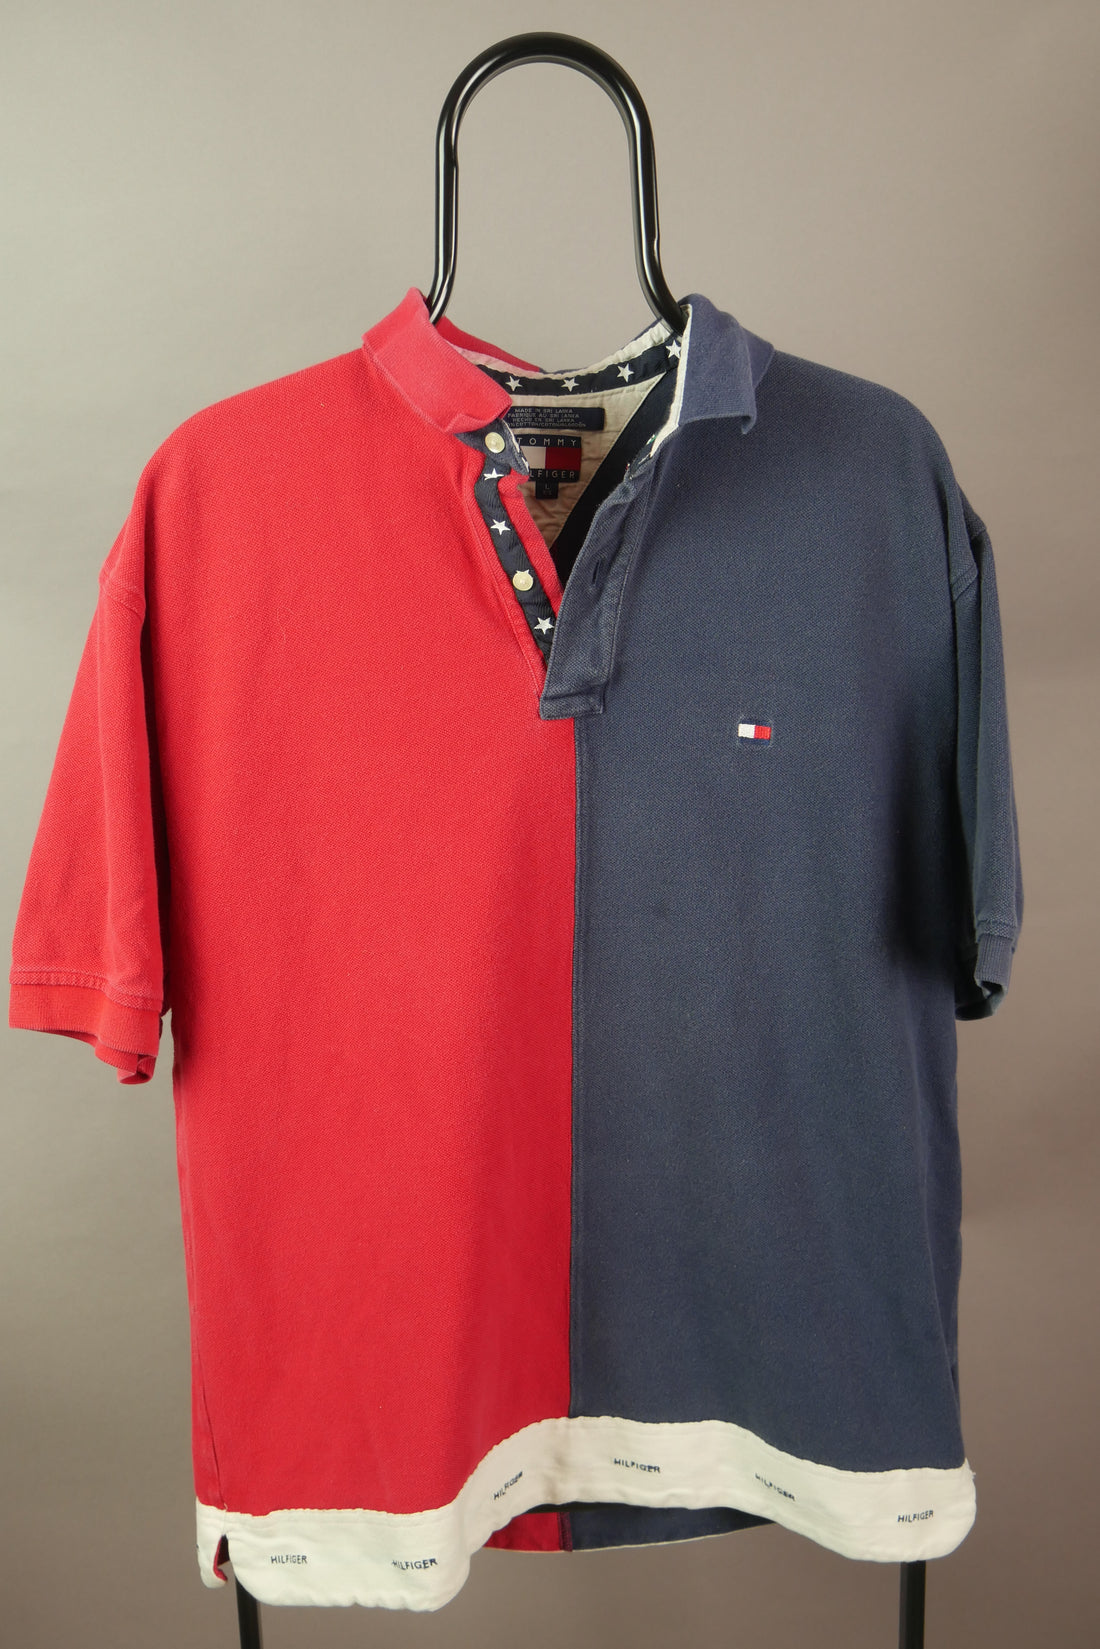 The Tommy Hilfiger Colourblock Polo Shirt (L)